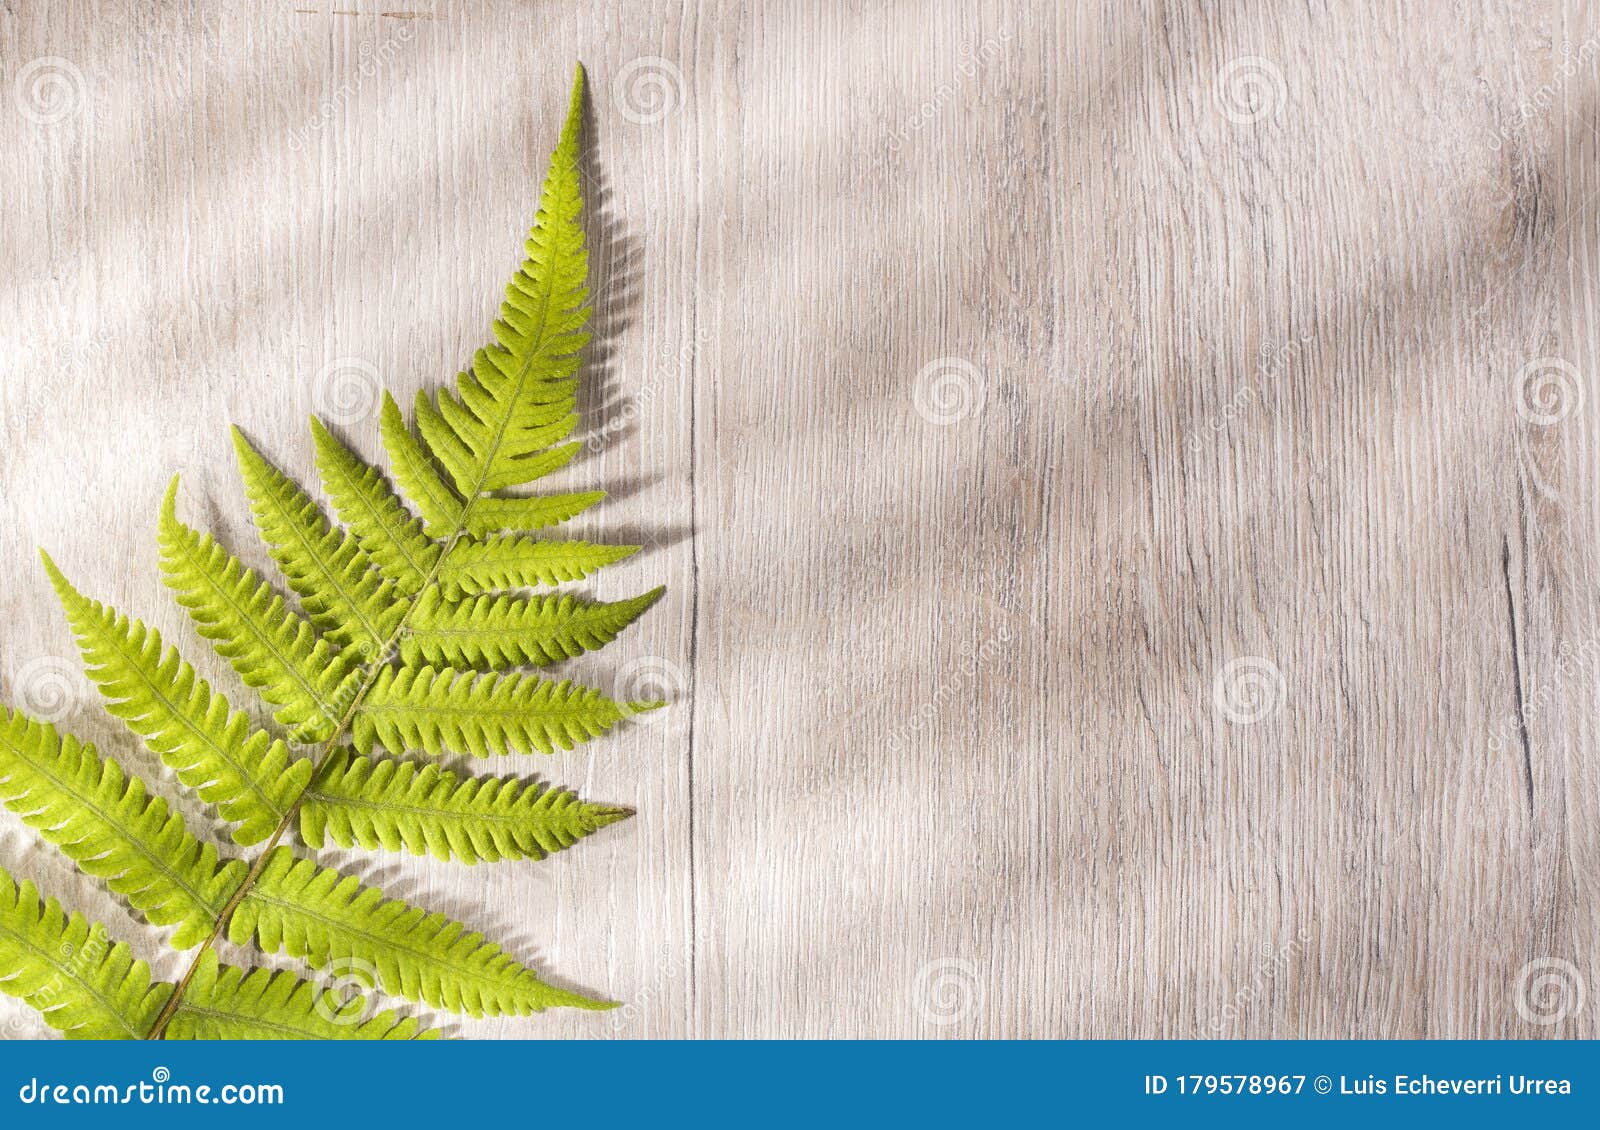 pteridium aquilinum fern - details of fern plants. text space